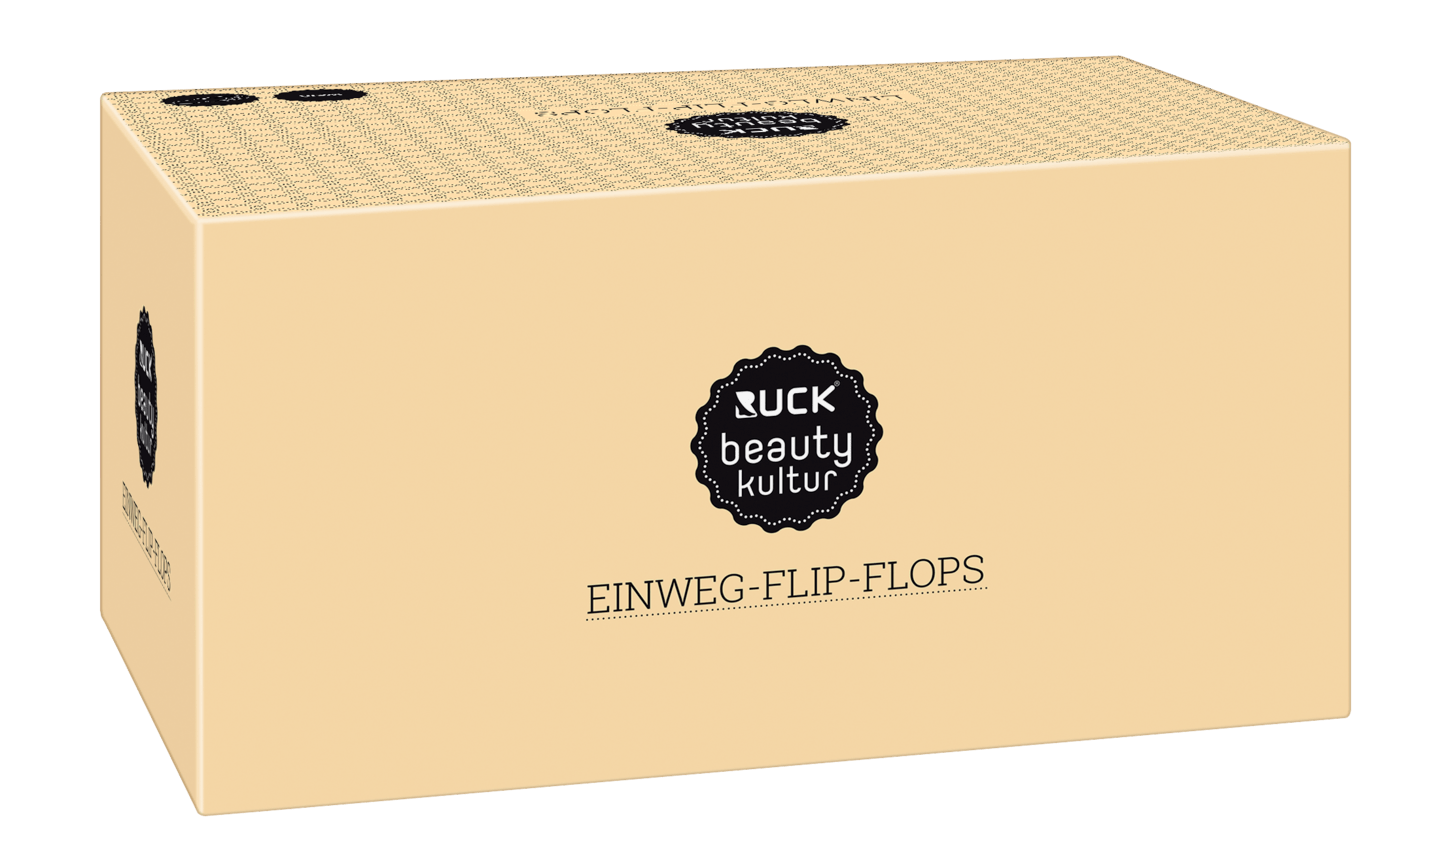 RUCK beautykultur - Einweg-Flip-Flops